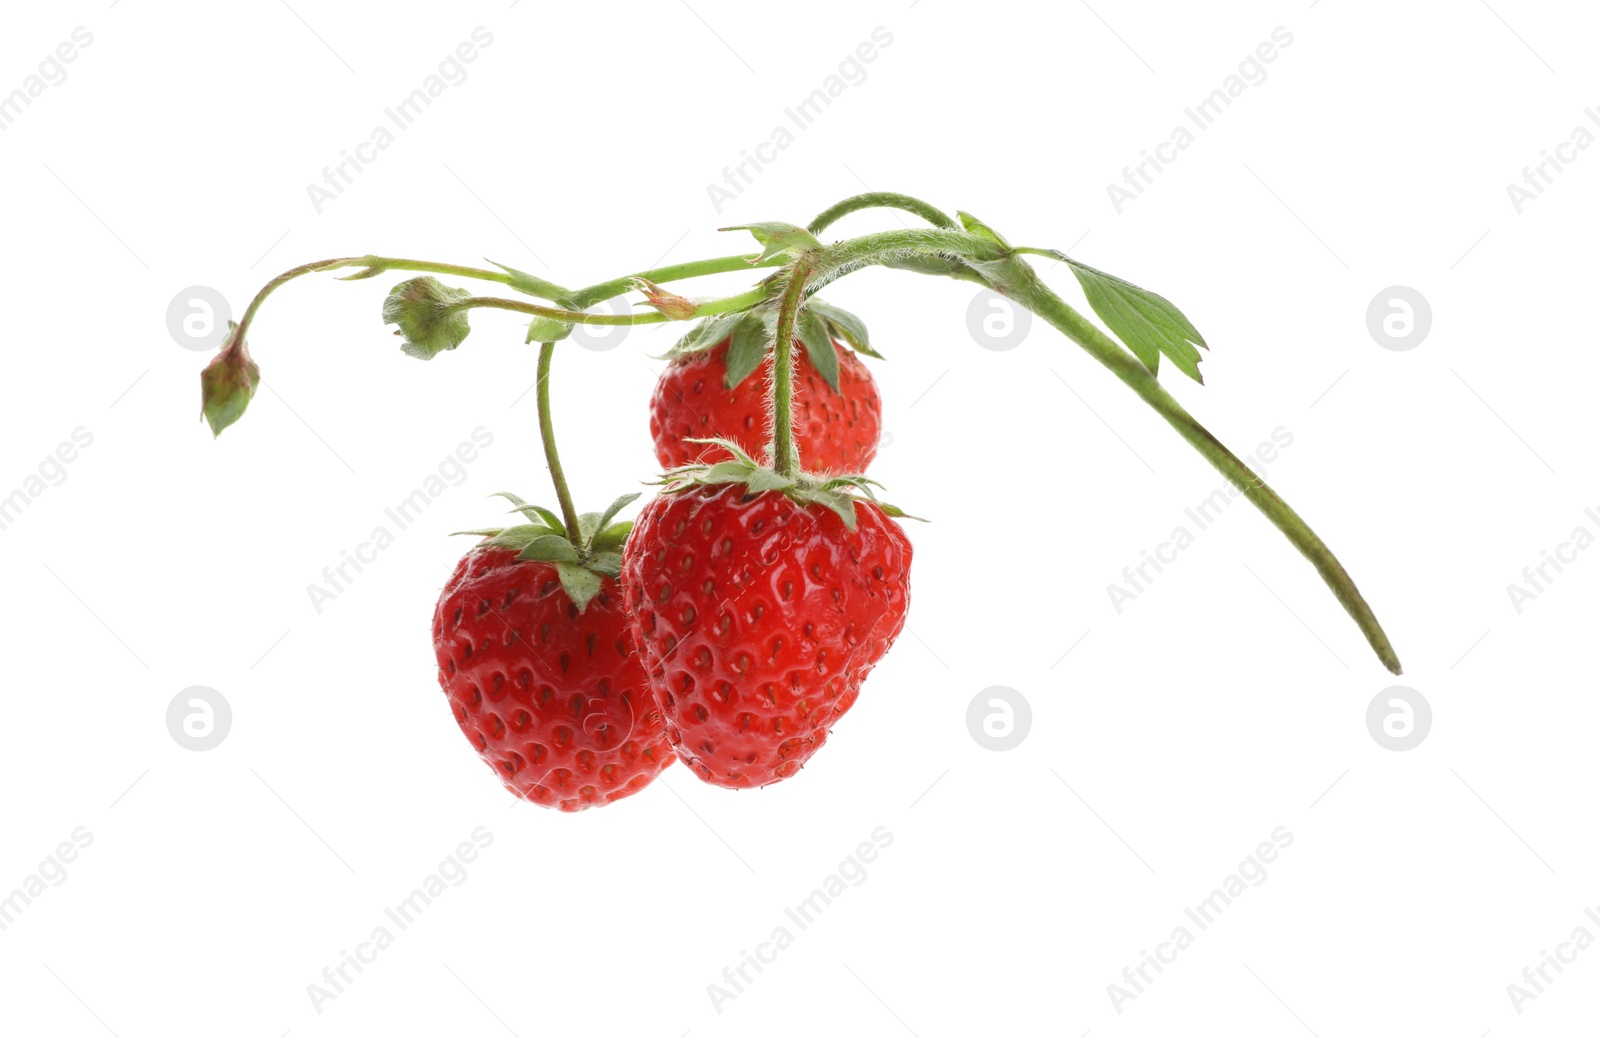 Photo of Ripe strawberries on stem against white background